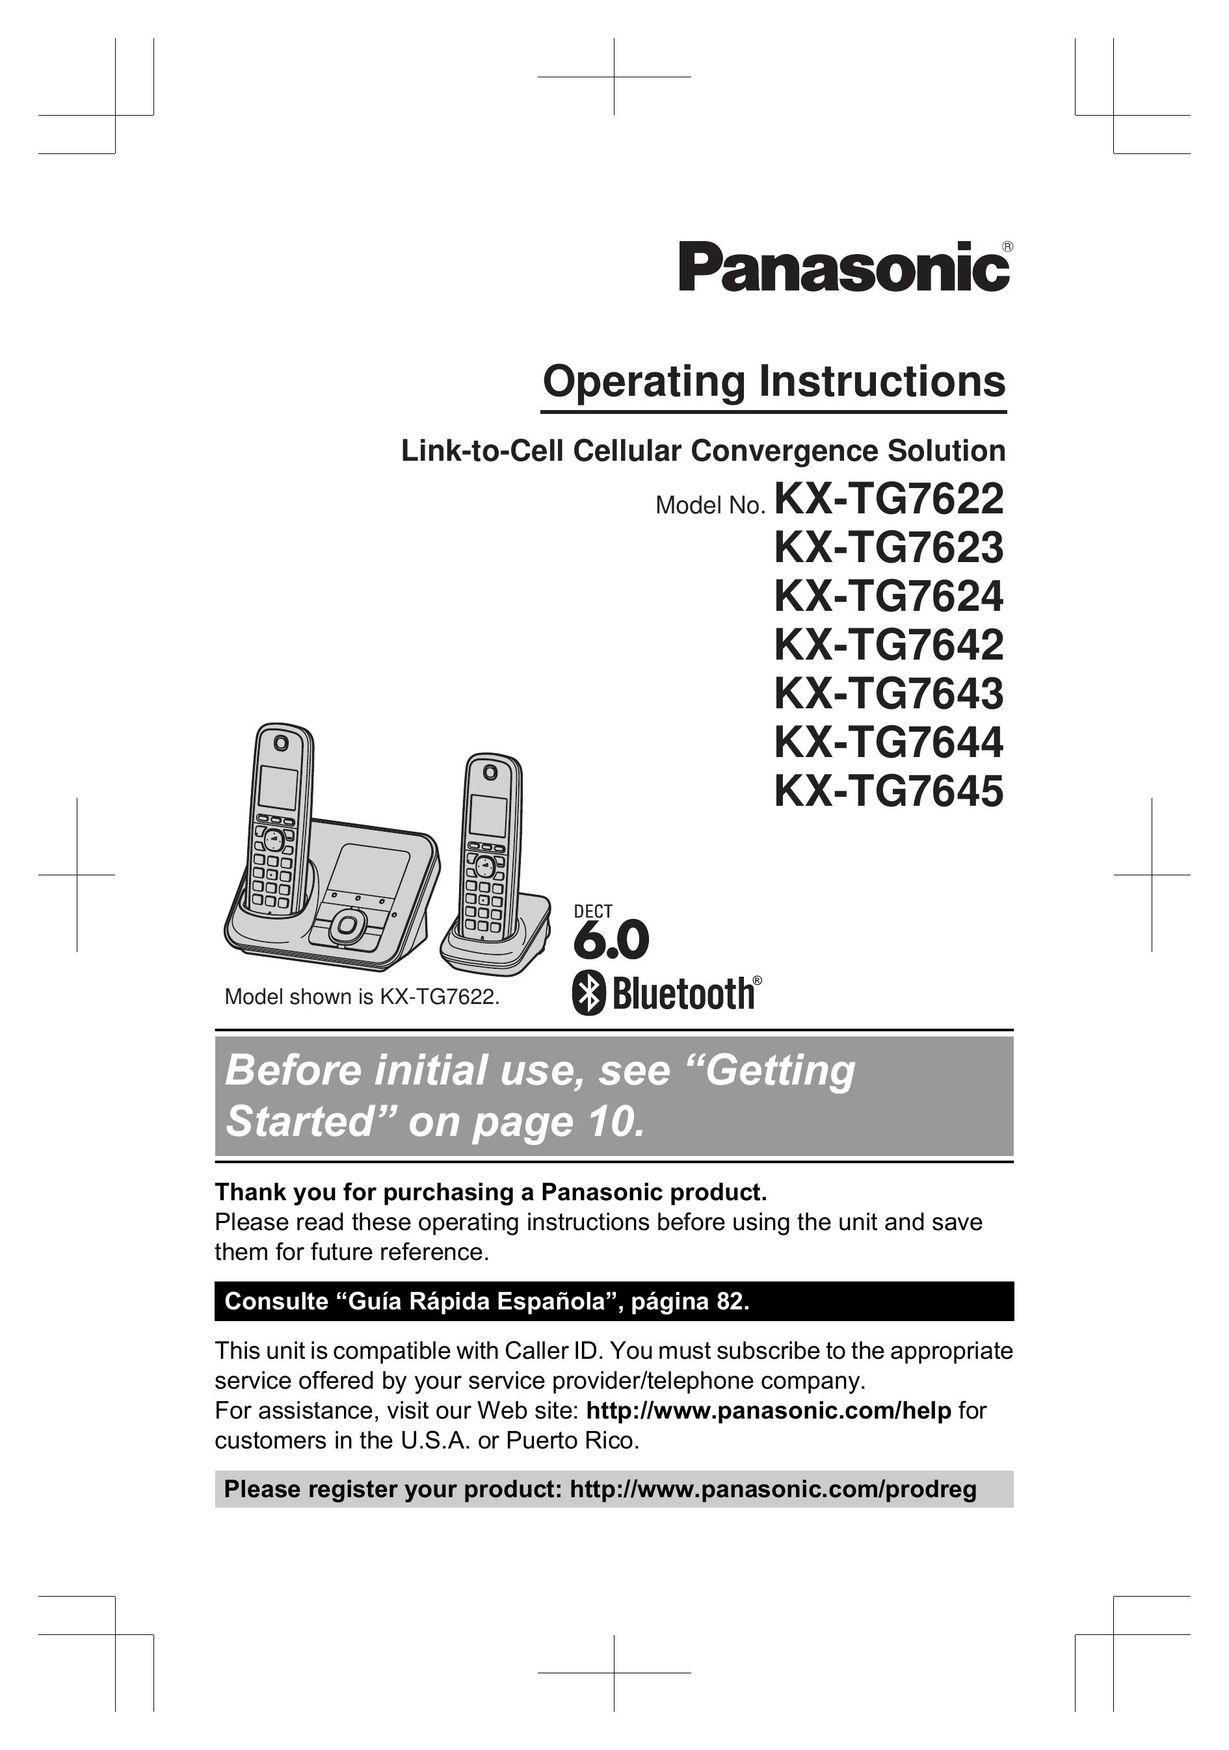 Panasonic KX-TG7623 Bluetooth Headset User Manual